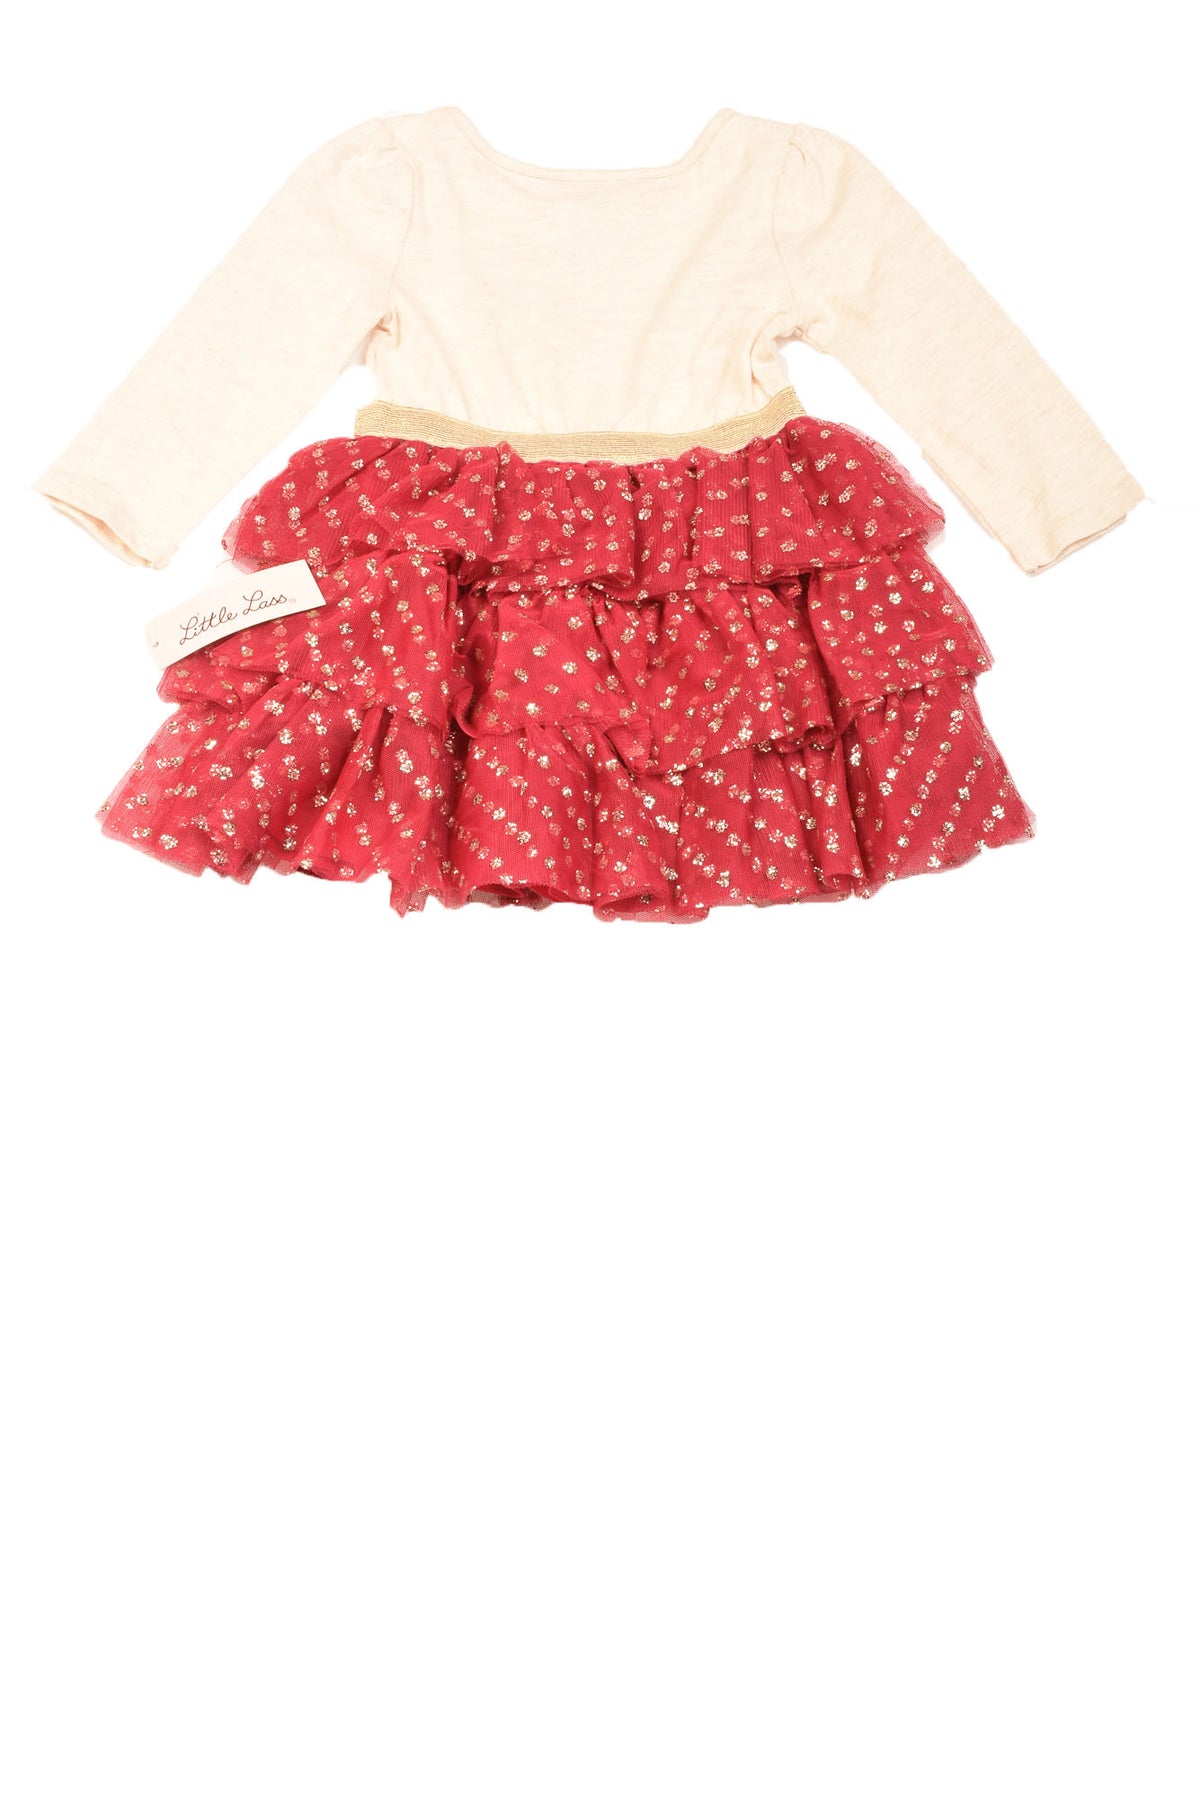 Little Lass Size 2T Toddler Girl&#39;s Dress